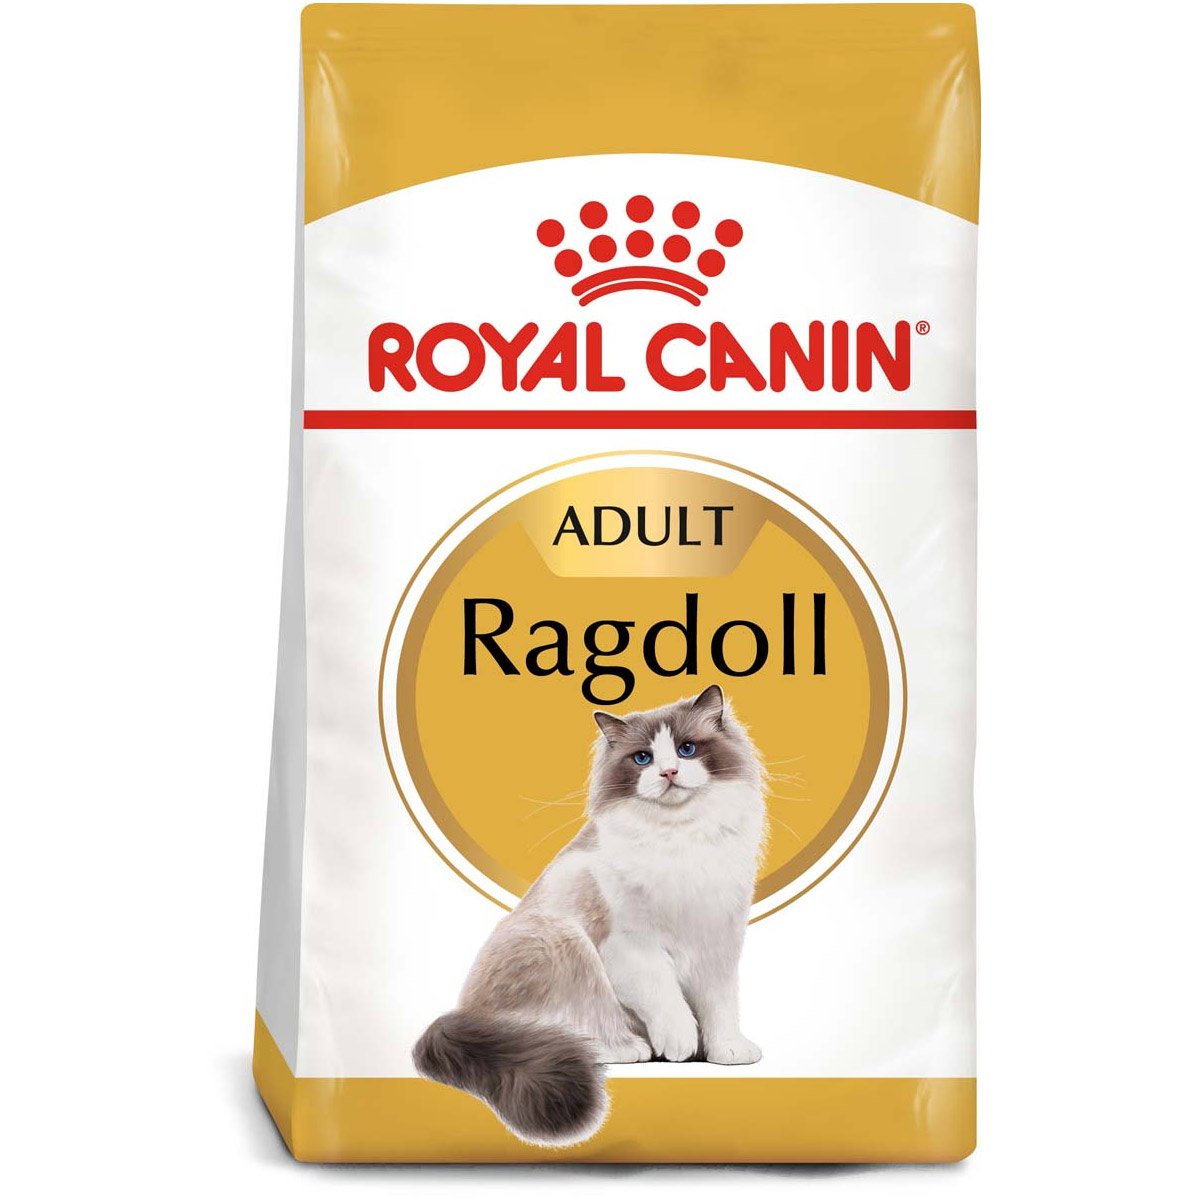 ROYAL CANIN Ragdoll Adult Katzenfutter trocken 10kg von Royal Canin